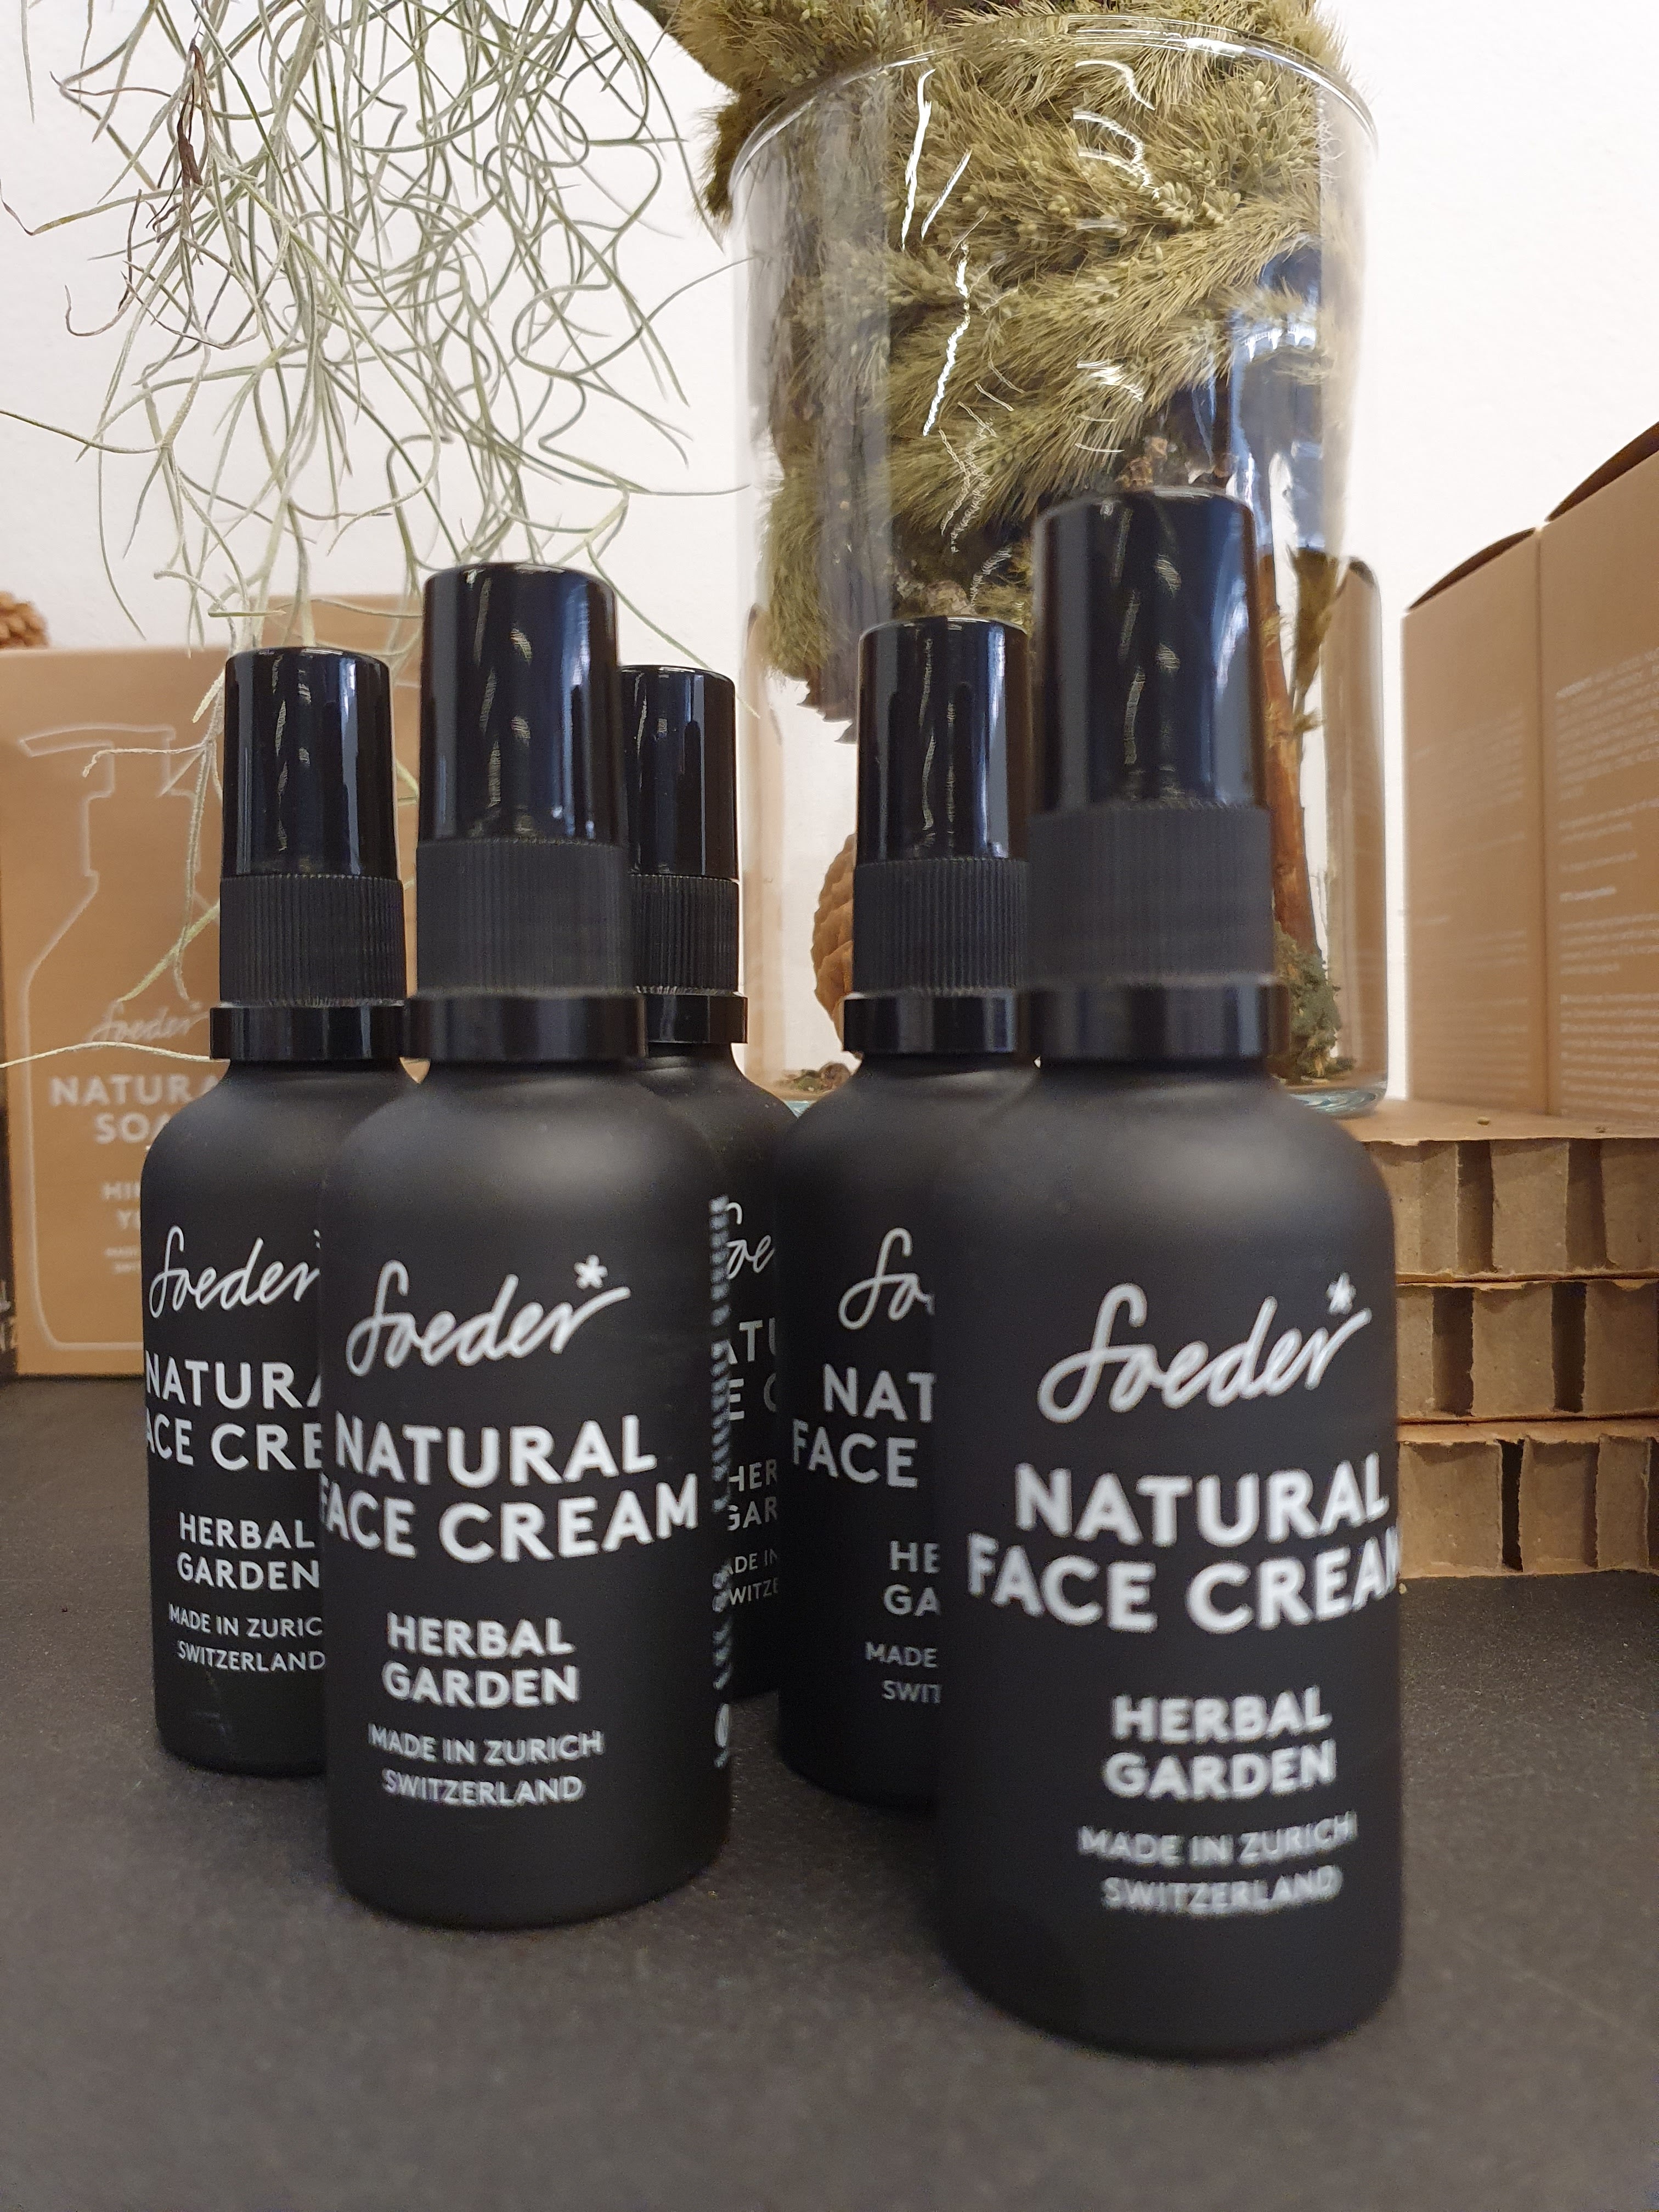 Soeder -  Crema viso naturale "Herbal Garden"